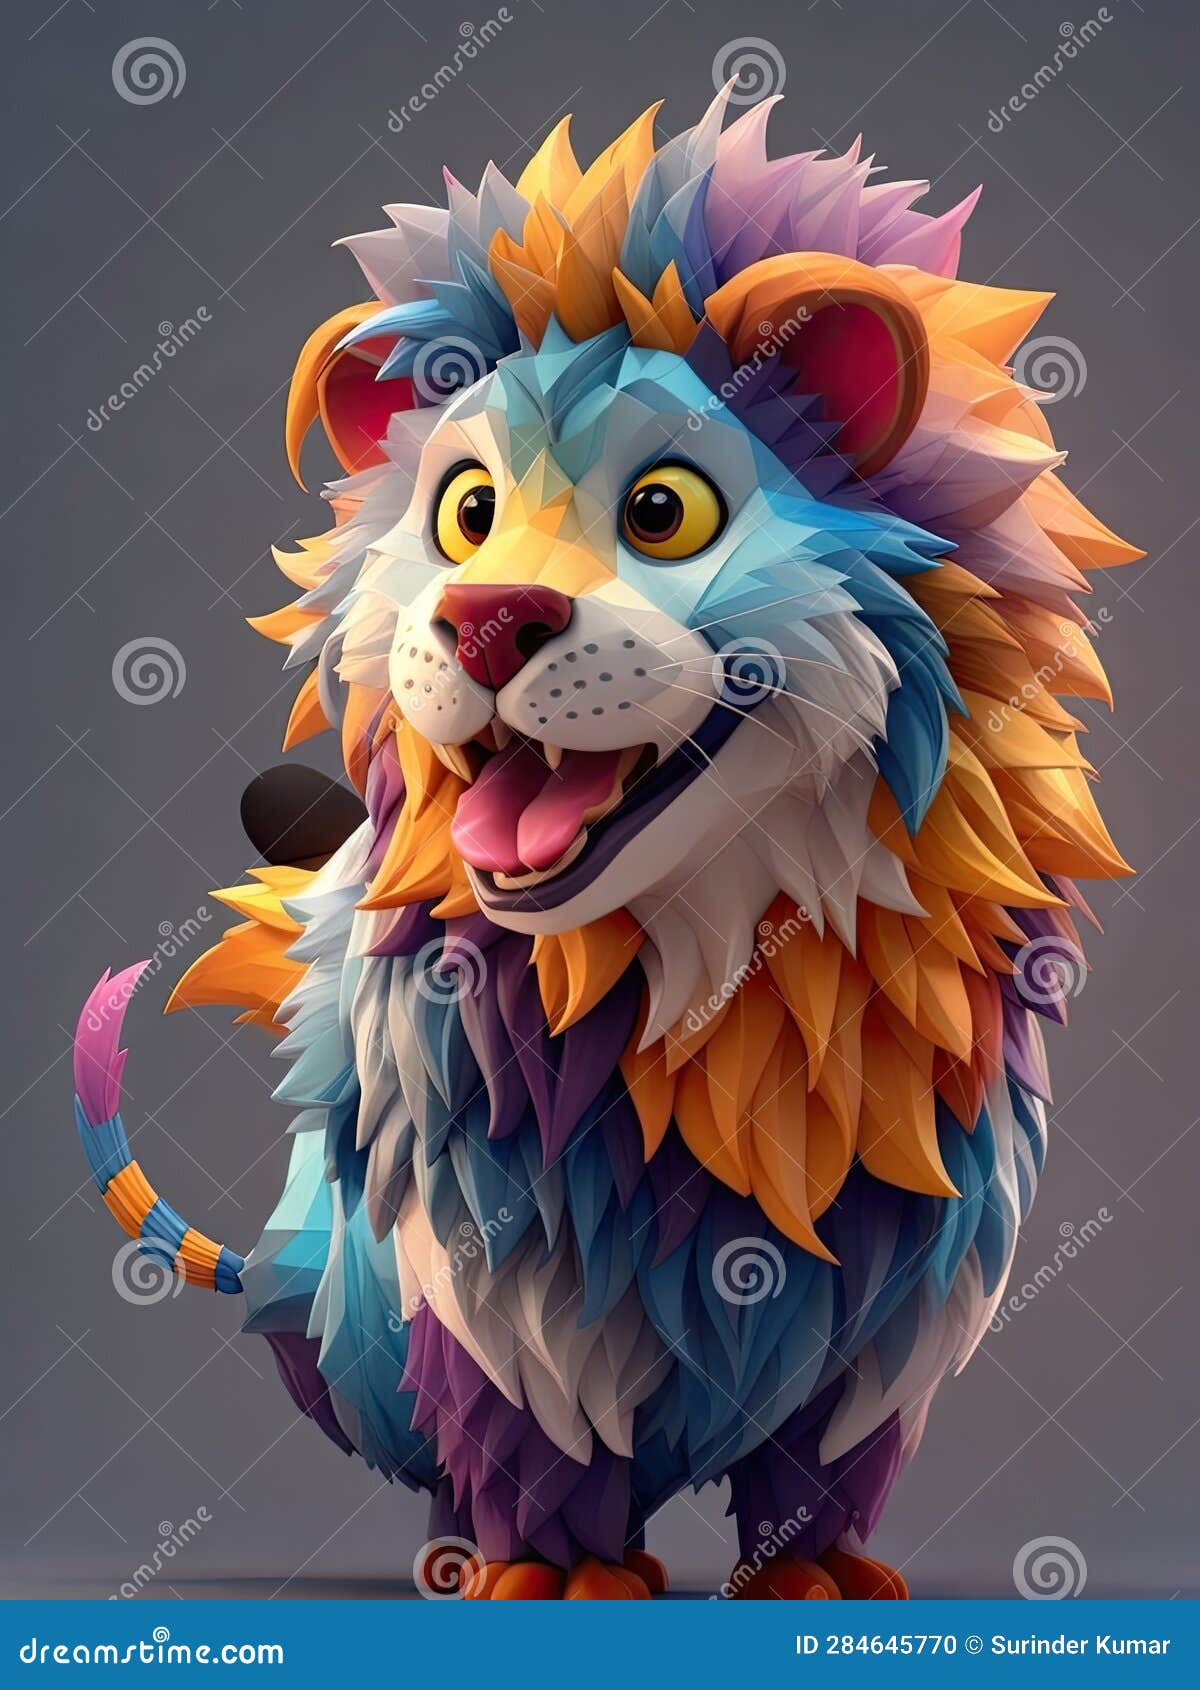 cartoon style lion, colorful 3d 